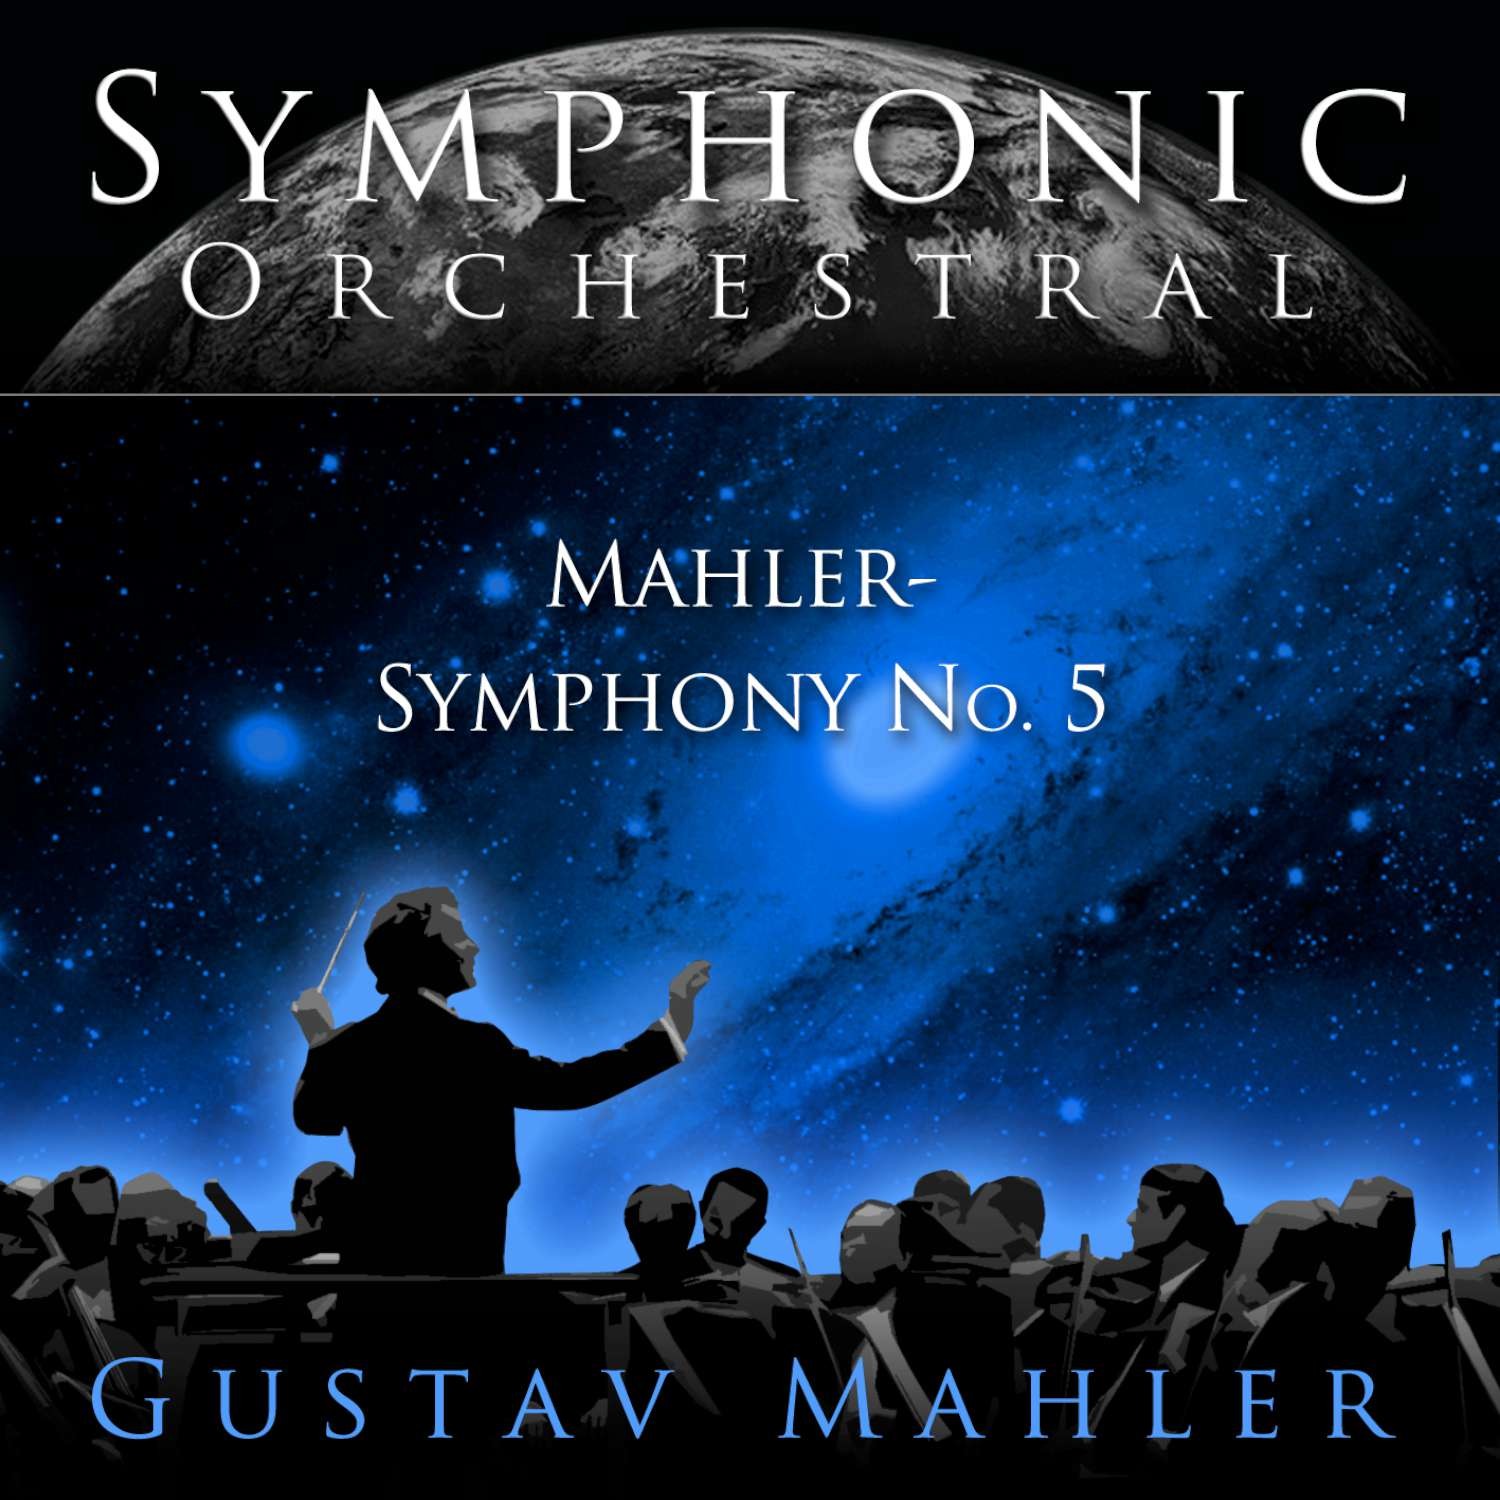 Symphonic Orchestral - Gustav Mahler: Symphony No 5